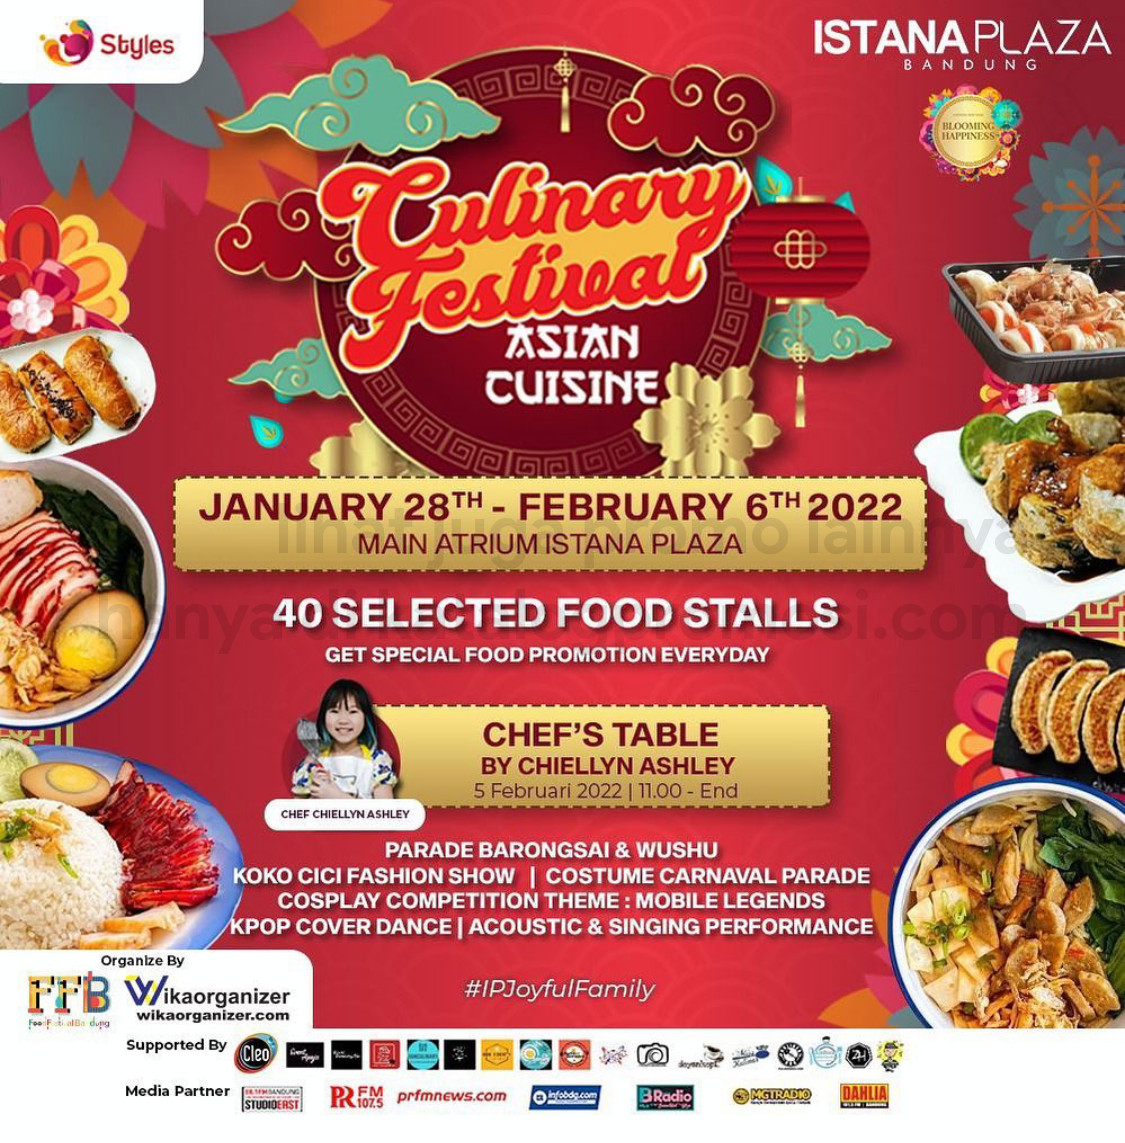 ISTANA PLAZA prersent Culinary Festival "Asian Cuisine"